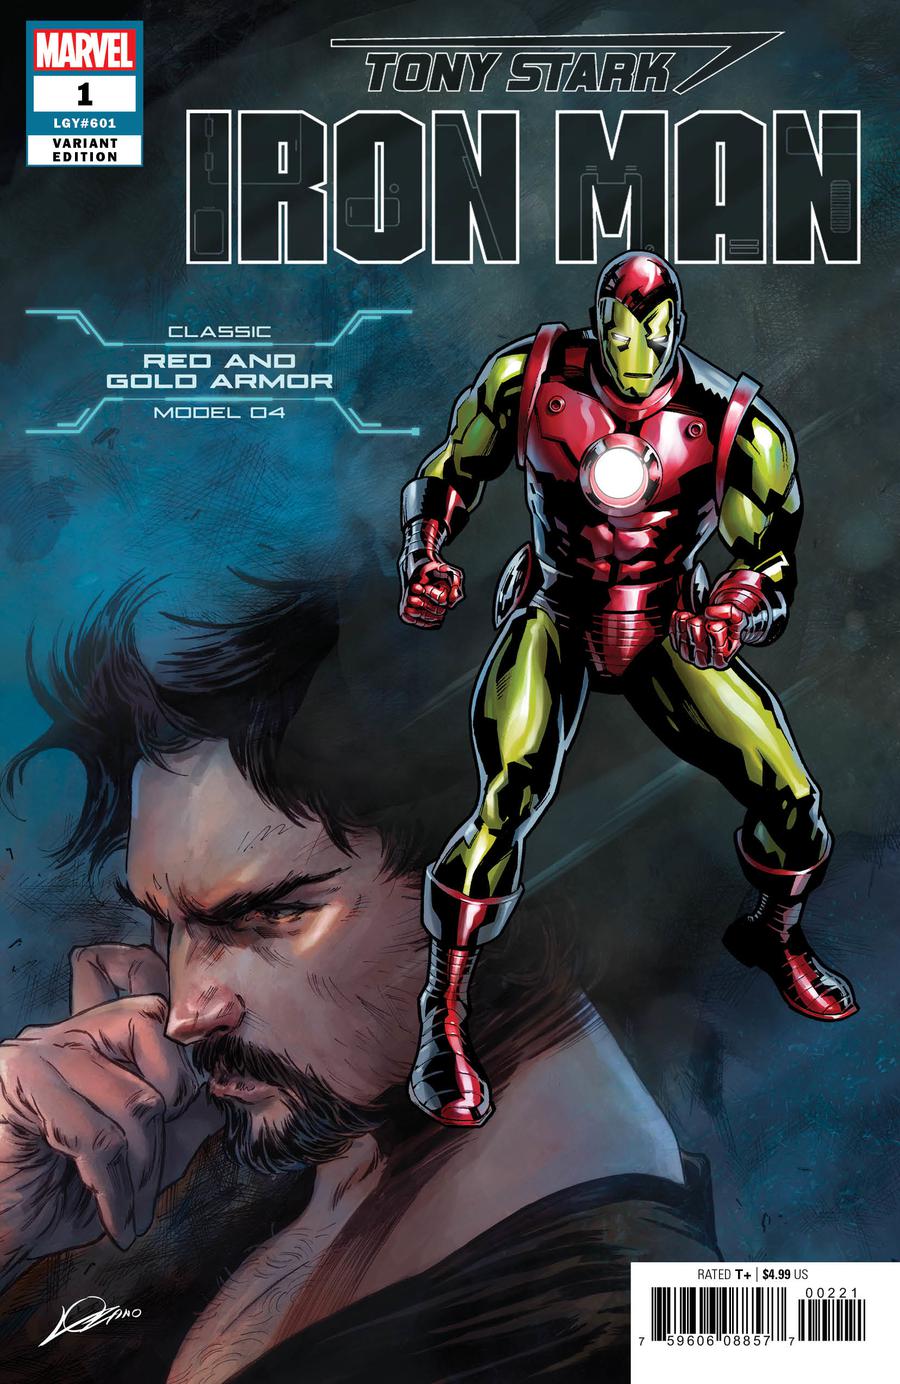 Tony Stark Iron Man #1 Cover E Variant Alexander Lozano & Valerio Schiti Model 04 Classic Red And Gold Armor Cover